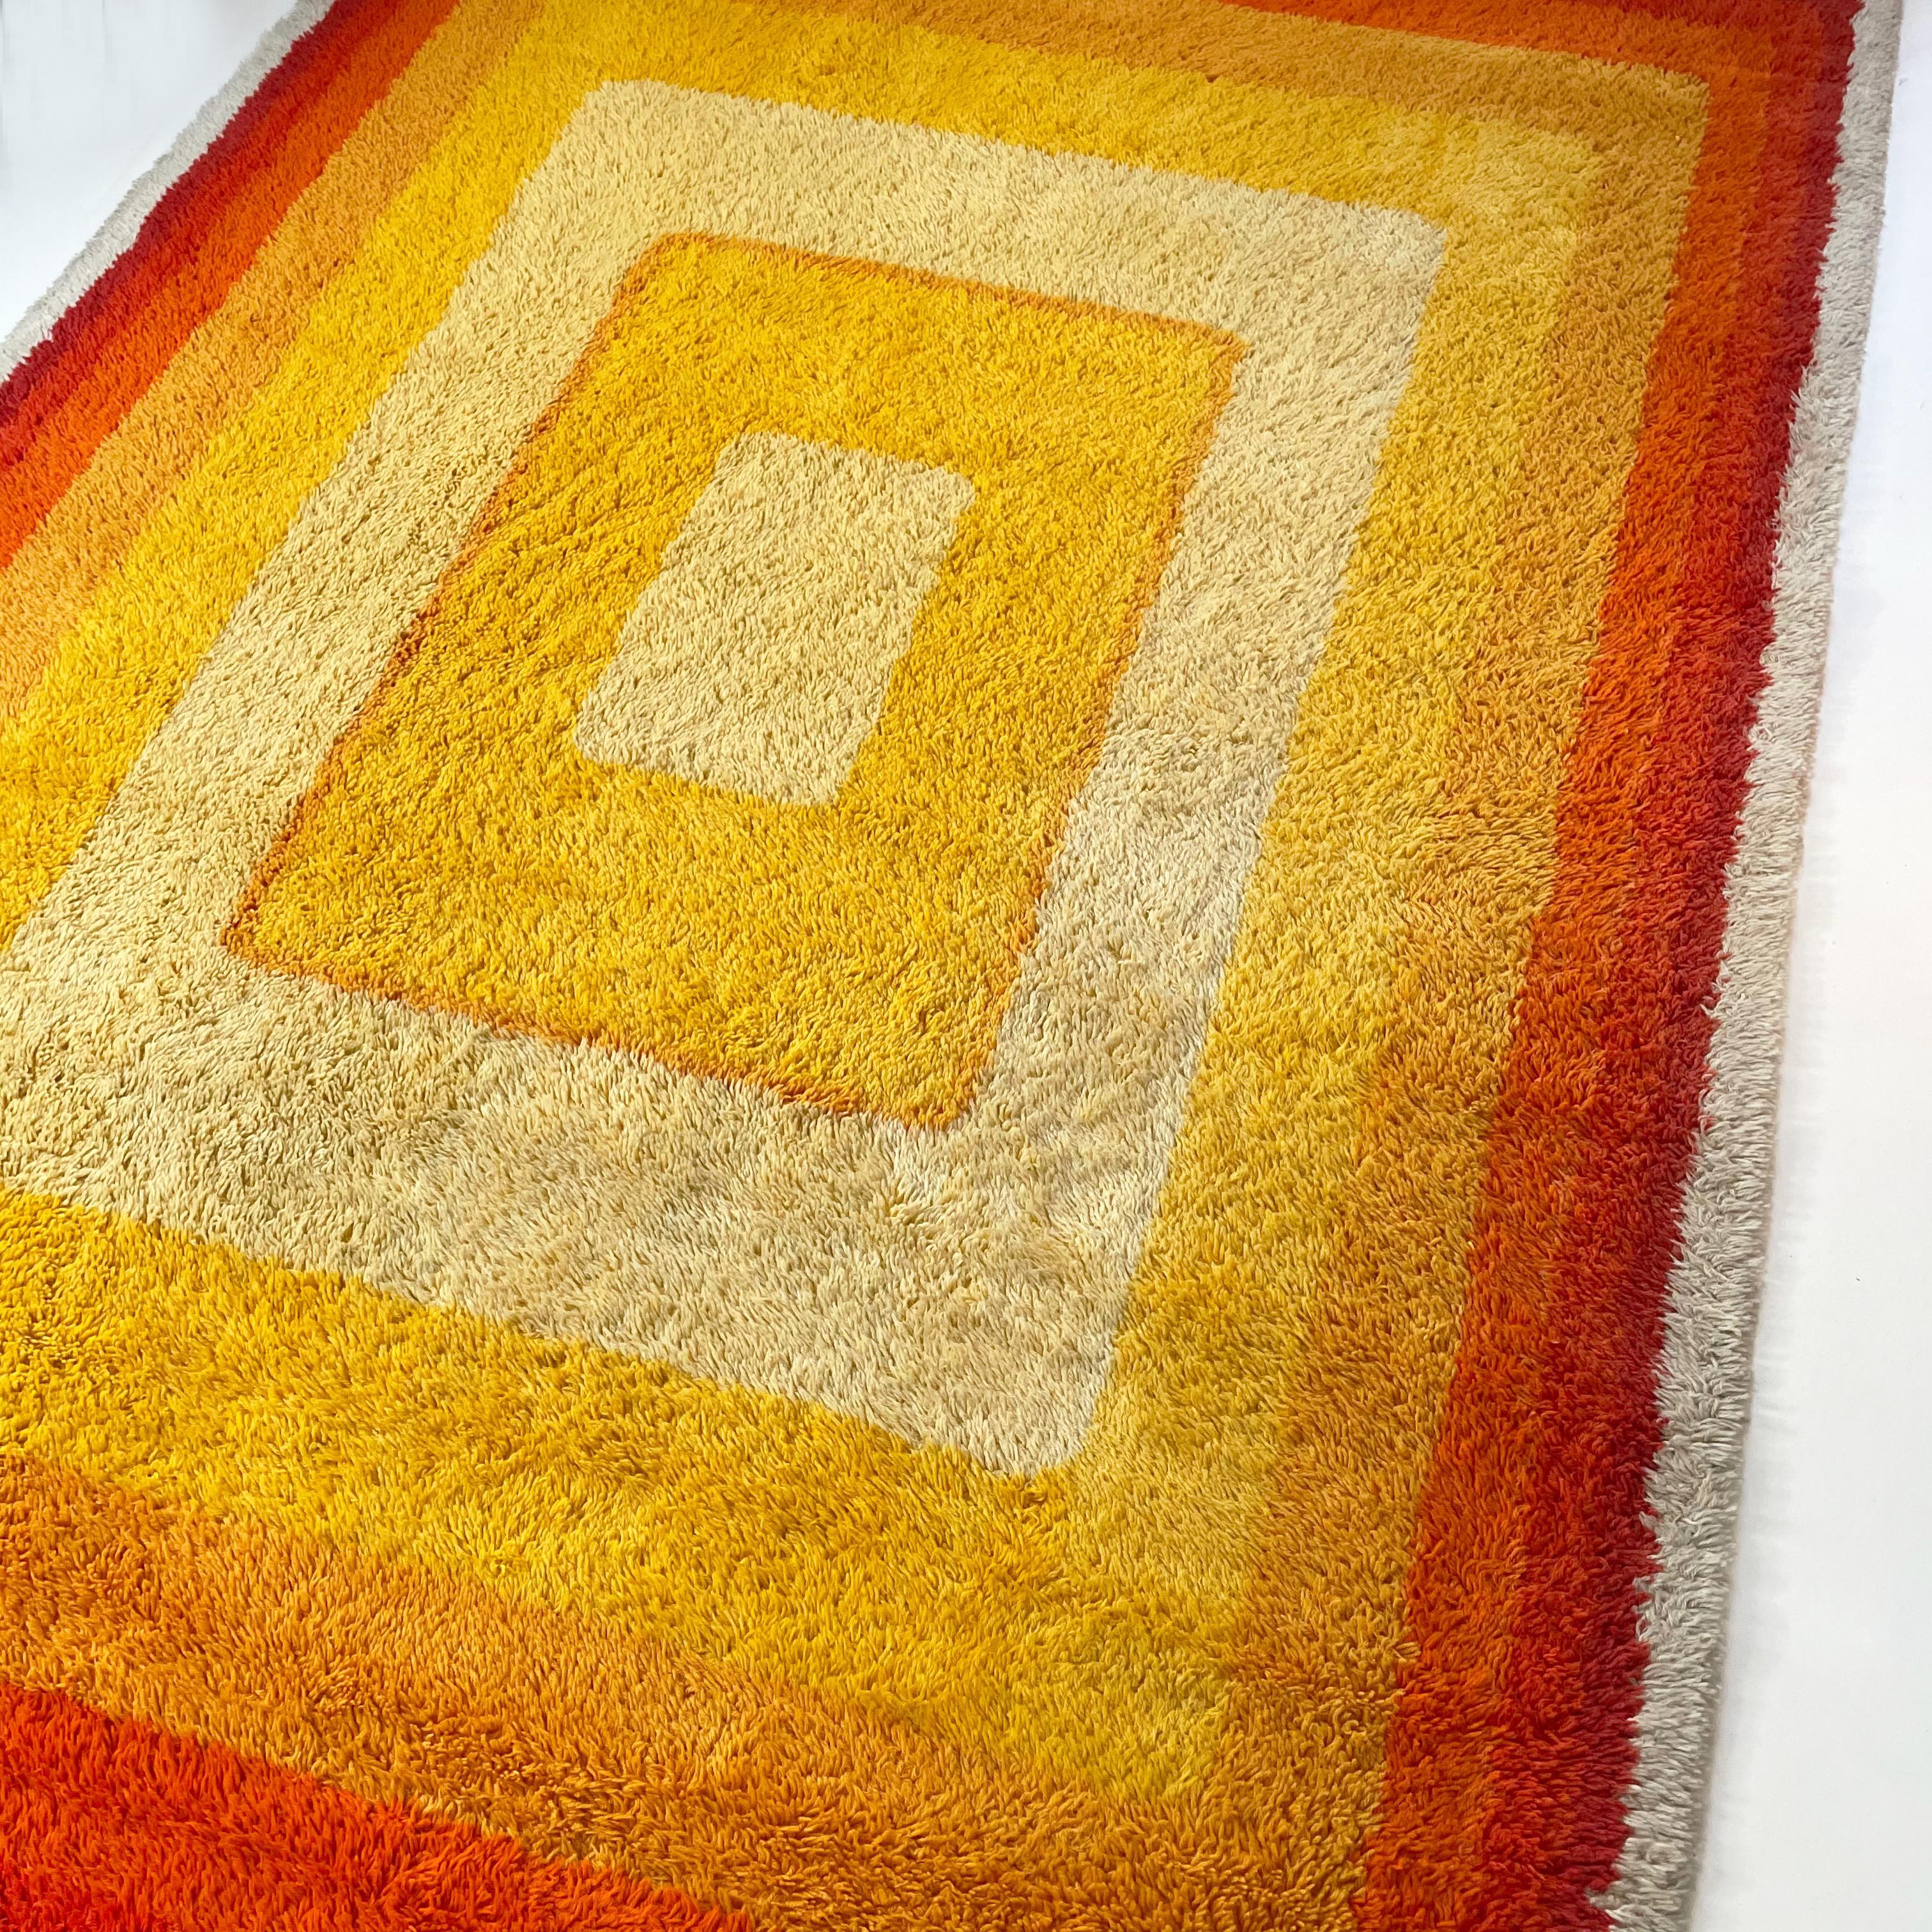 70s style carpet